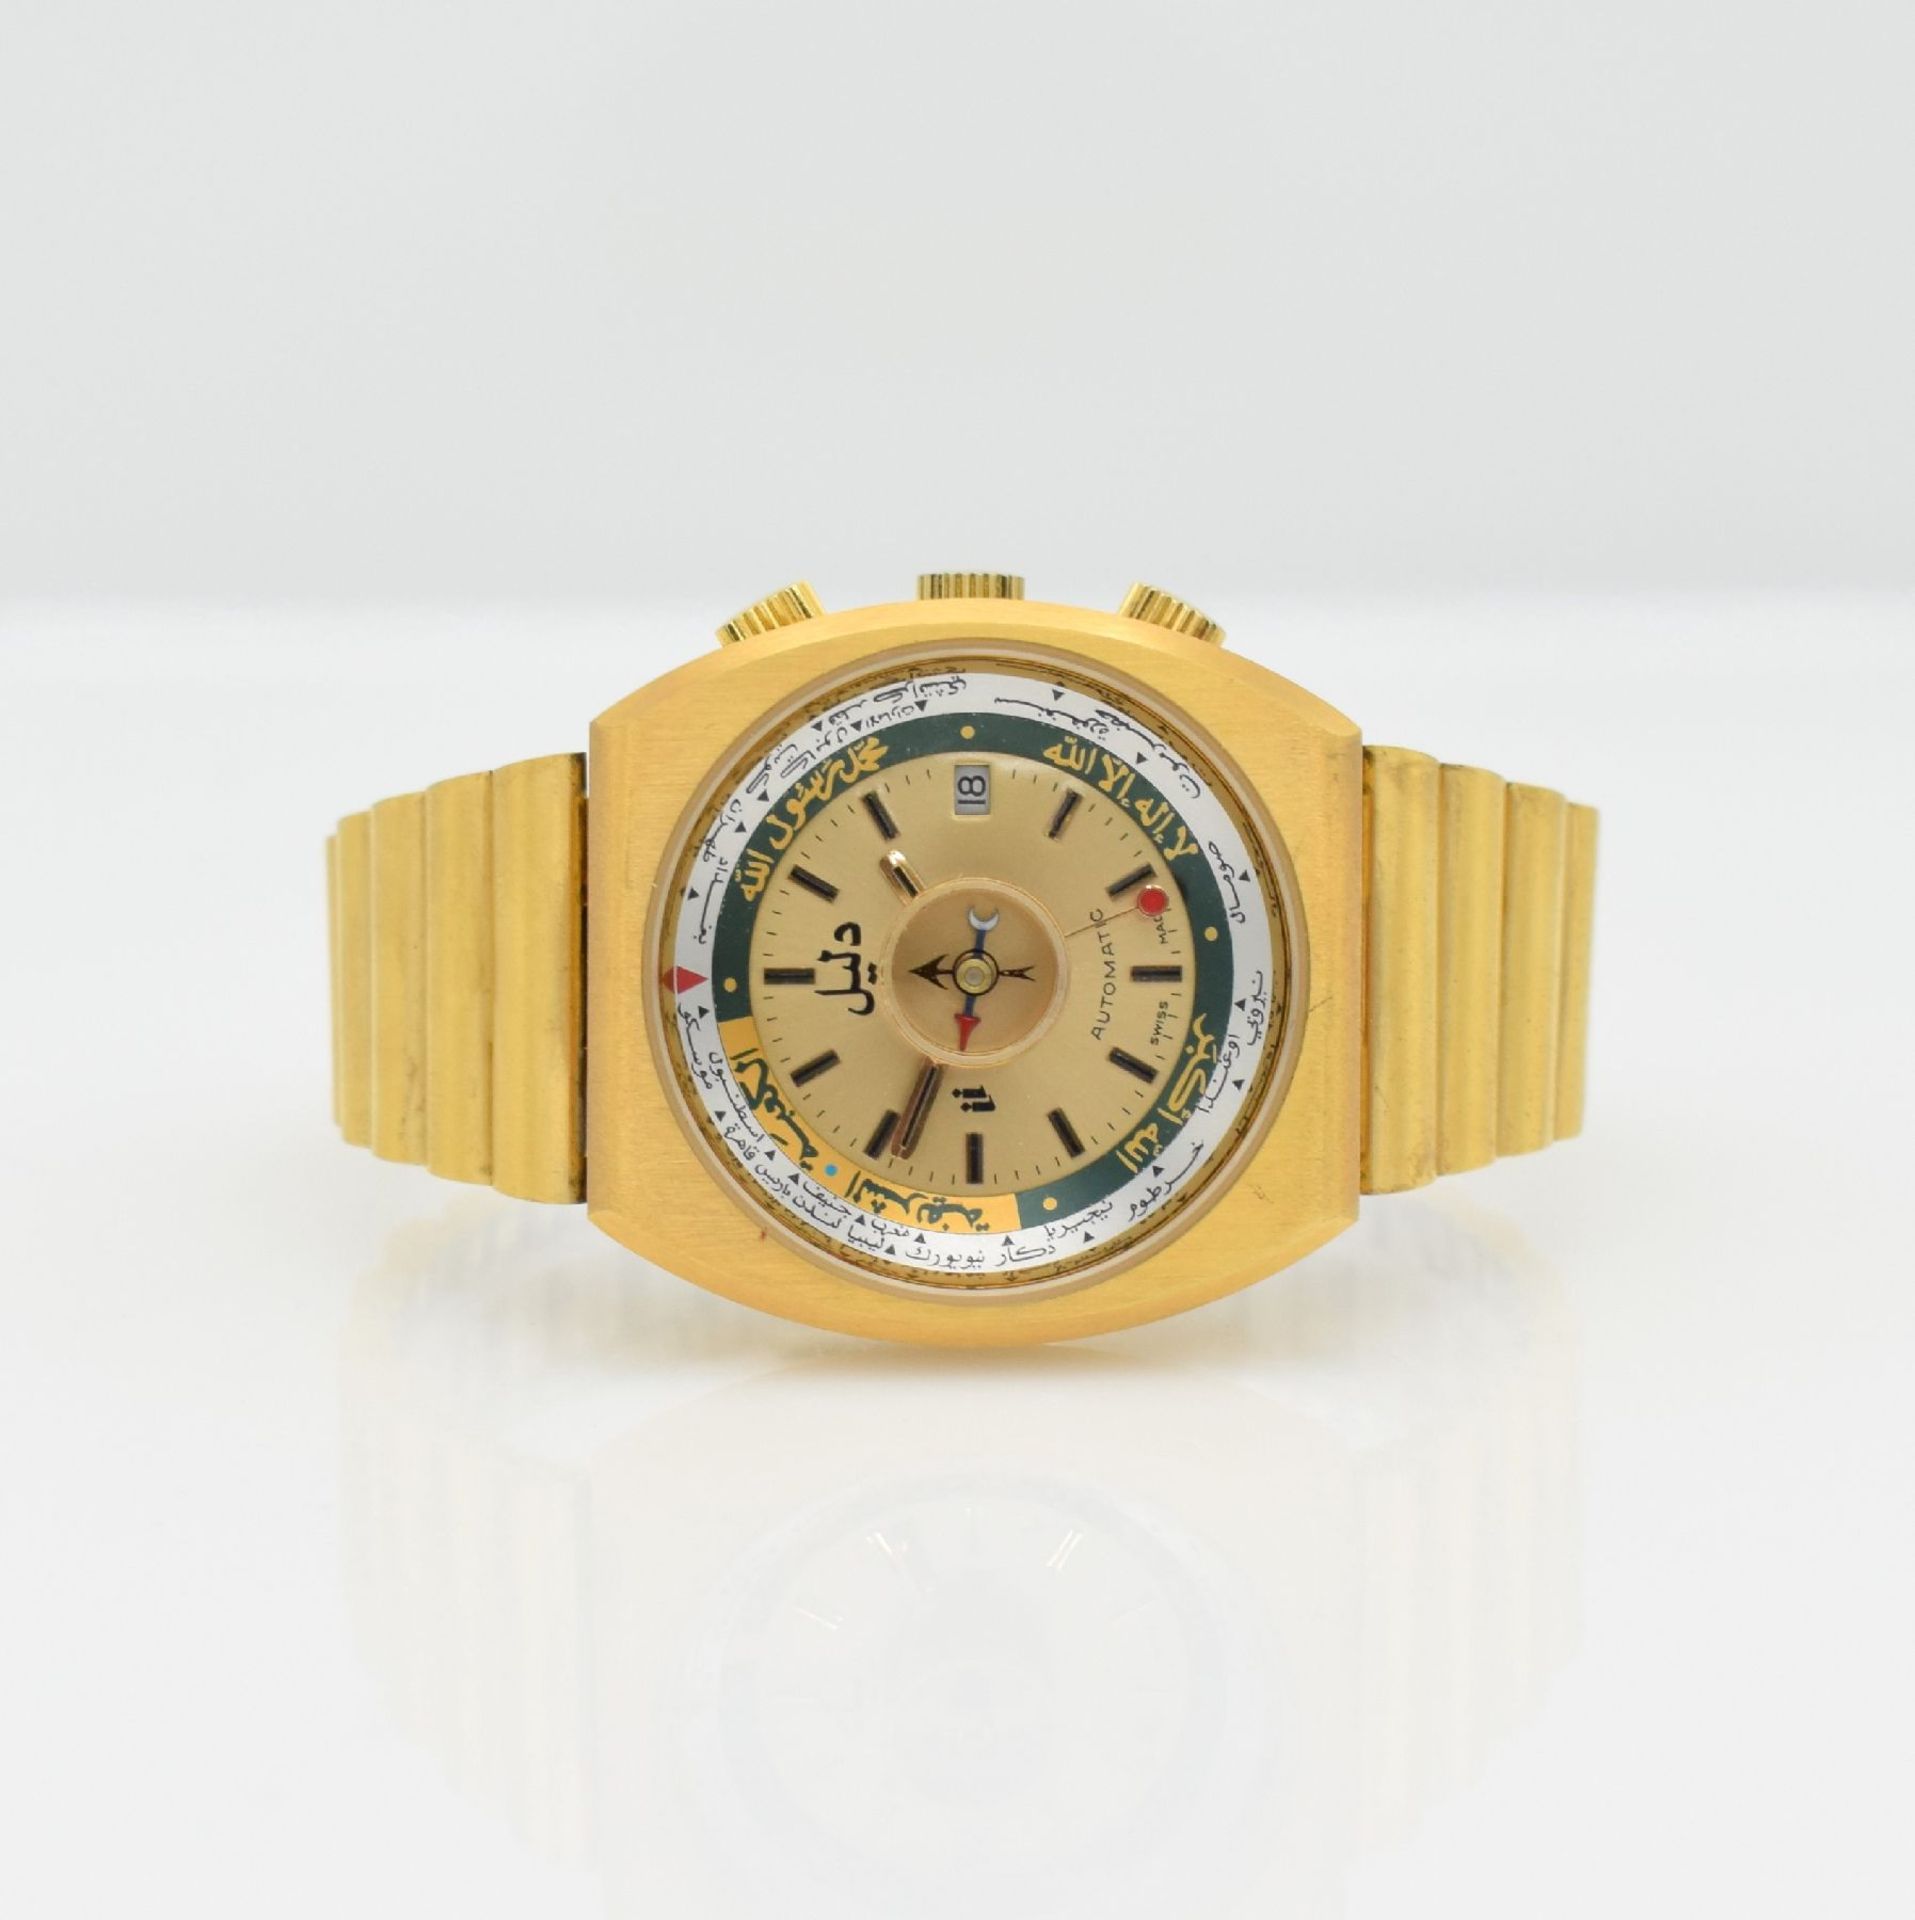 DALIL Moslems-Watch unworn gents wristwatch with compass, Switzerland around 1975, self winding,